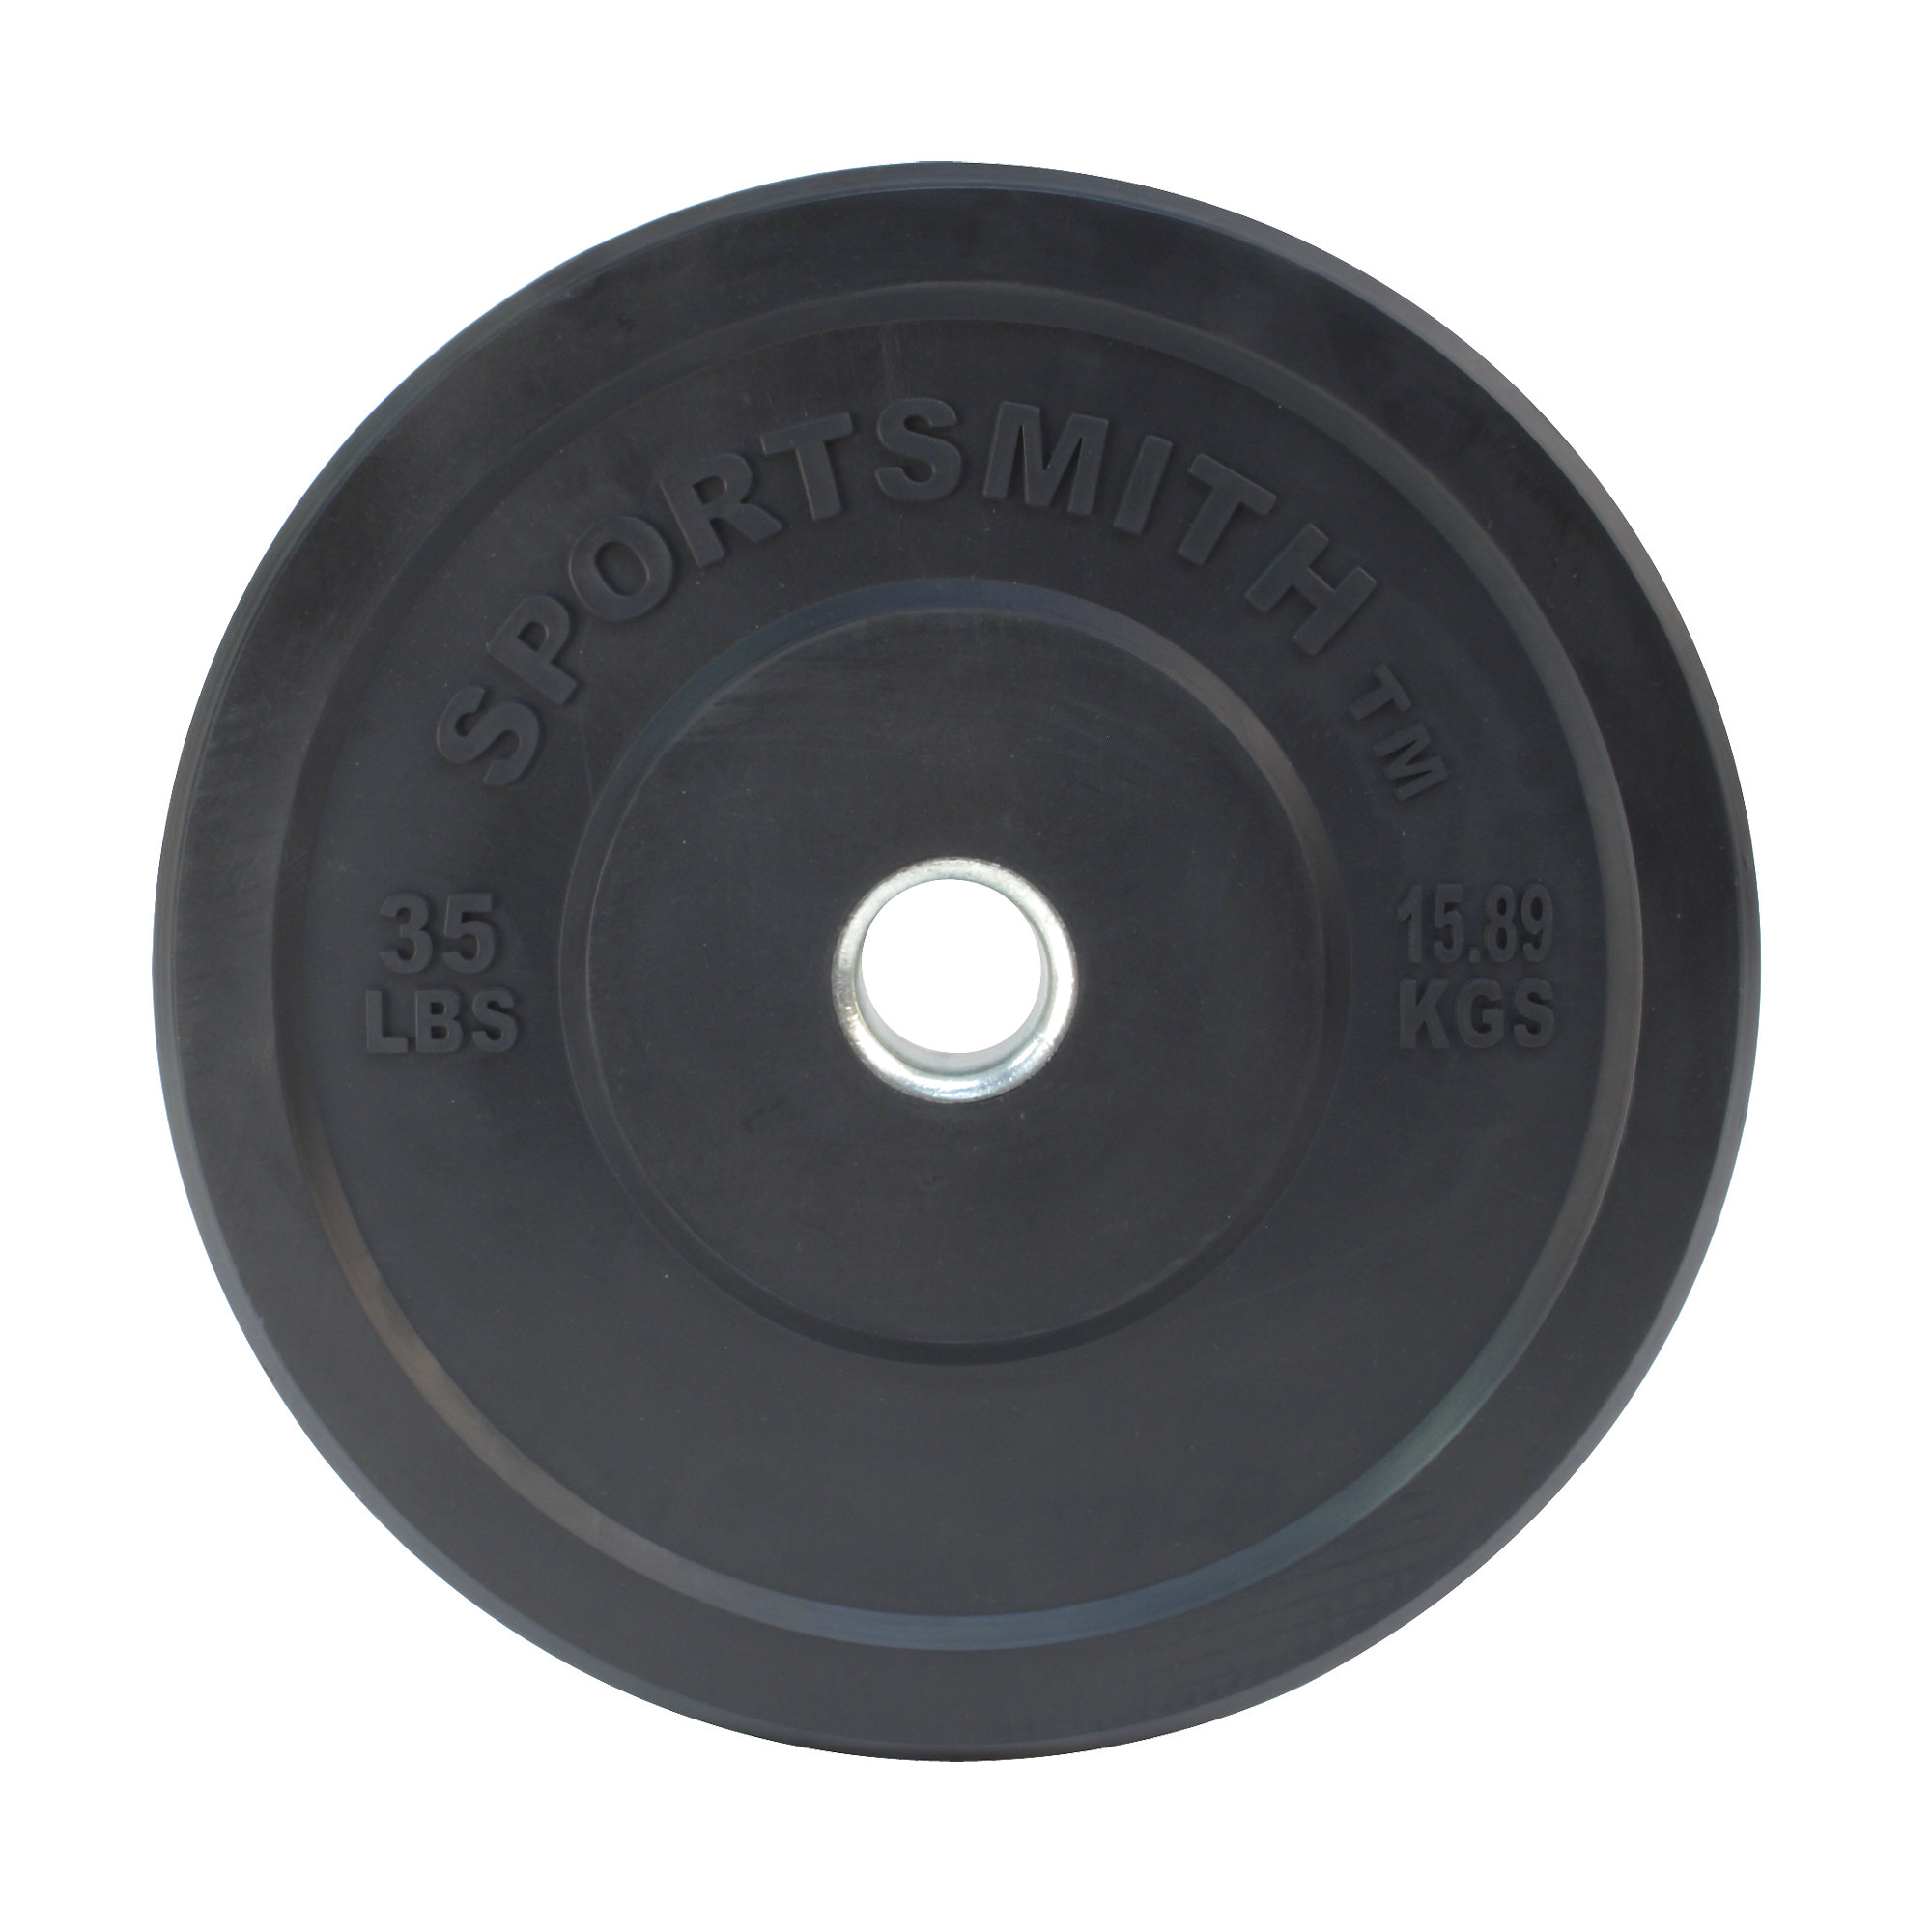 Premium Olympic Rubber Bumper Plate, Sportsmith, 35lb, Black